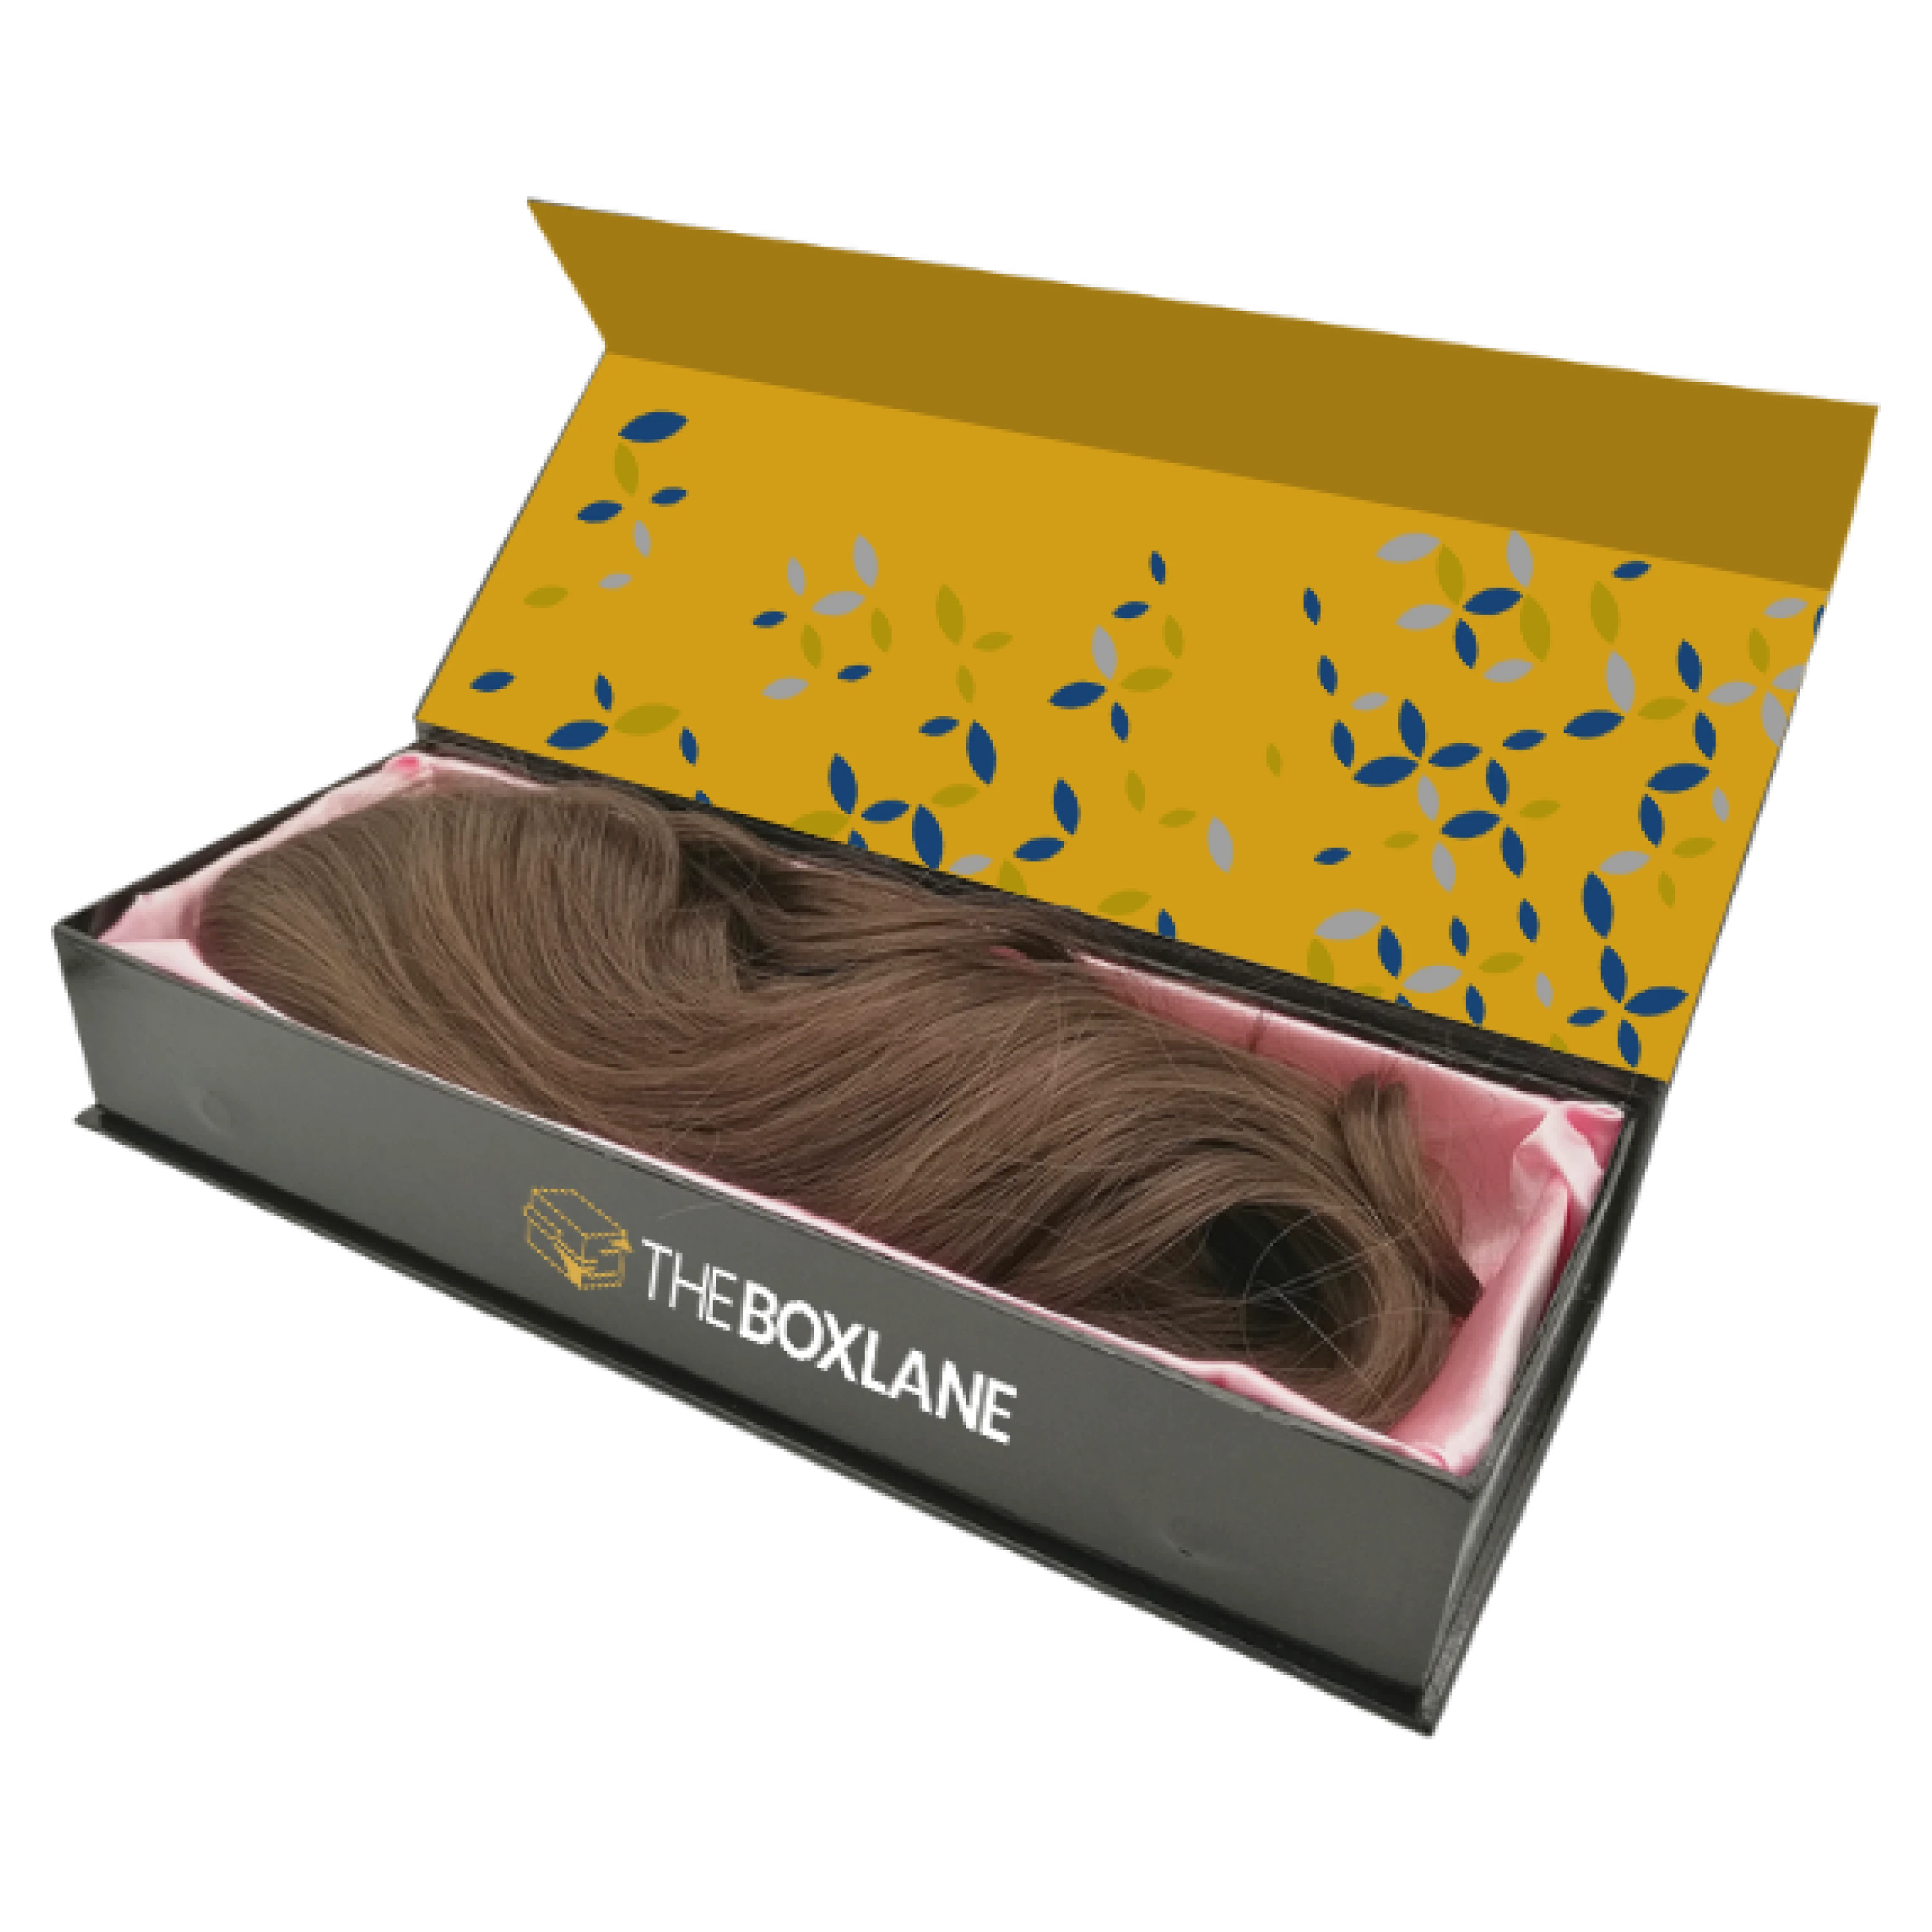 Carousel Hair Extension Boxes image 1 | The Box Lane